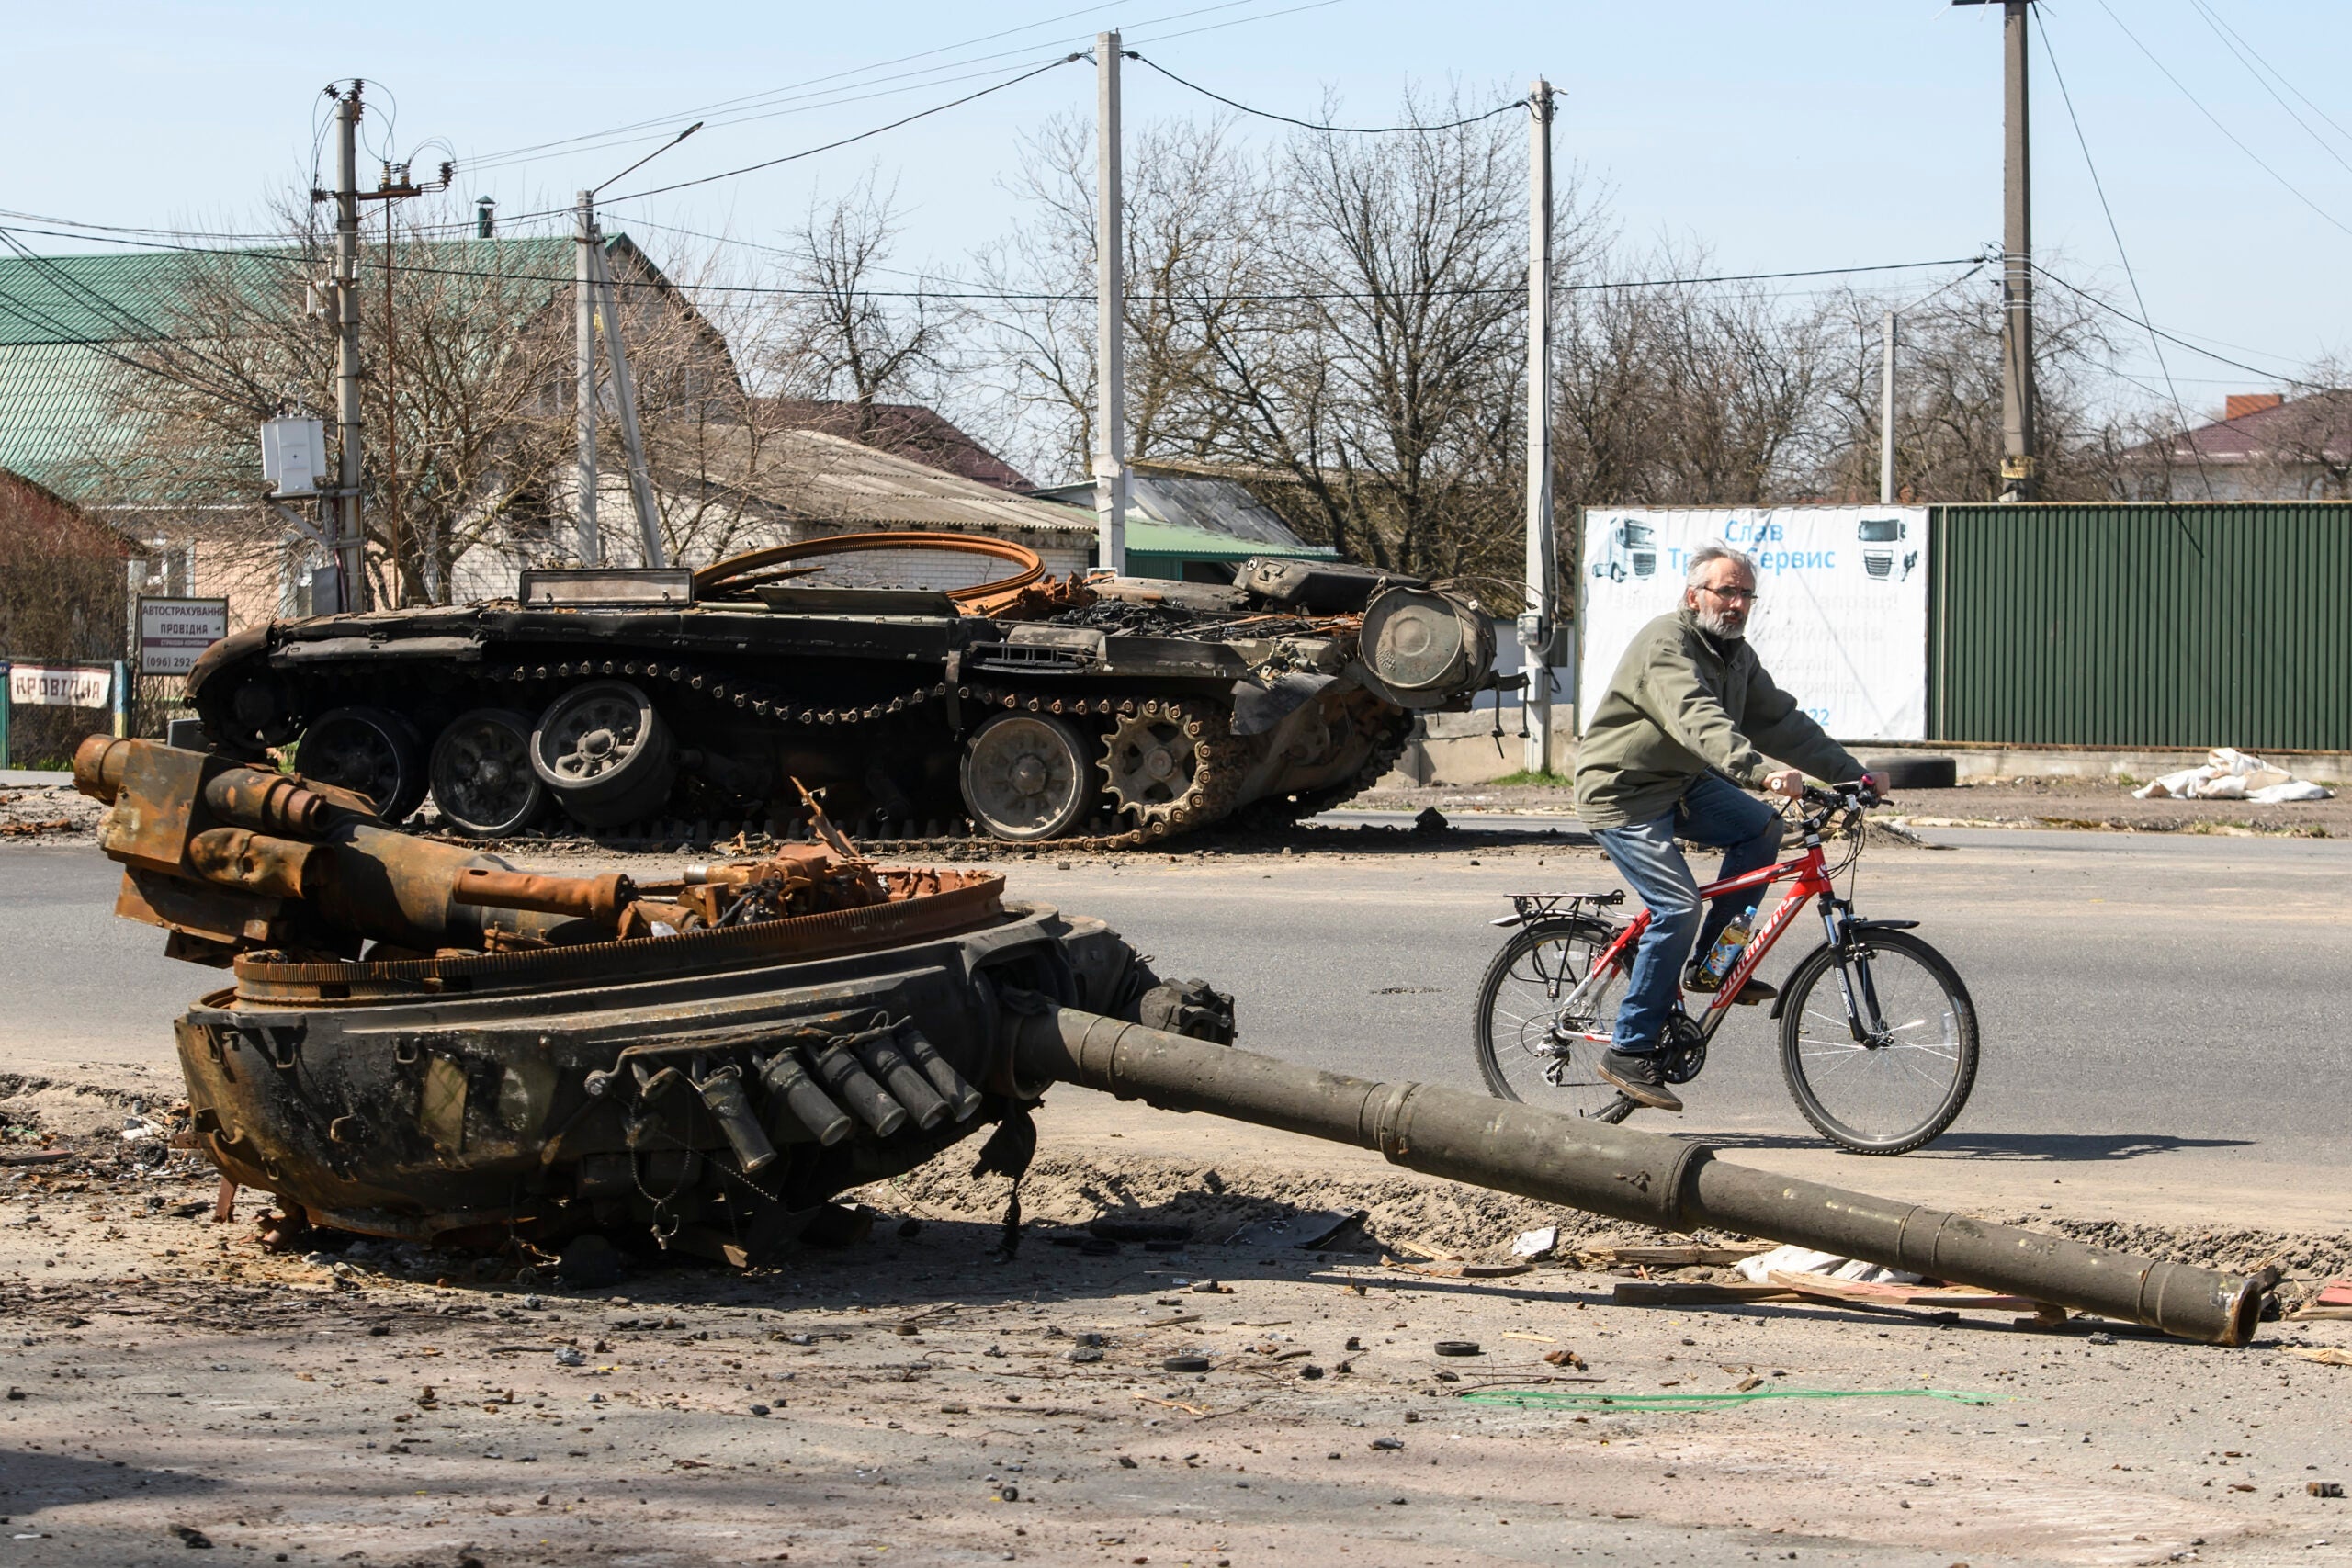 A man ride bike near Destroyed Russian military tank near Brovary, Kyiv area, Ukraine, 15 April 2022 (Photo by Maxym Marusenko/NurPhoto via Getty Images)